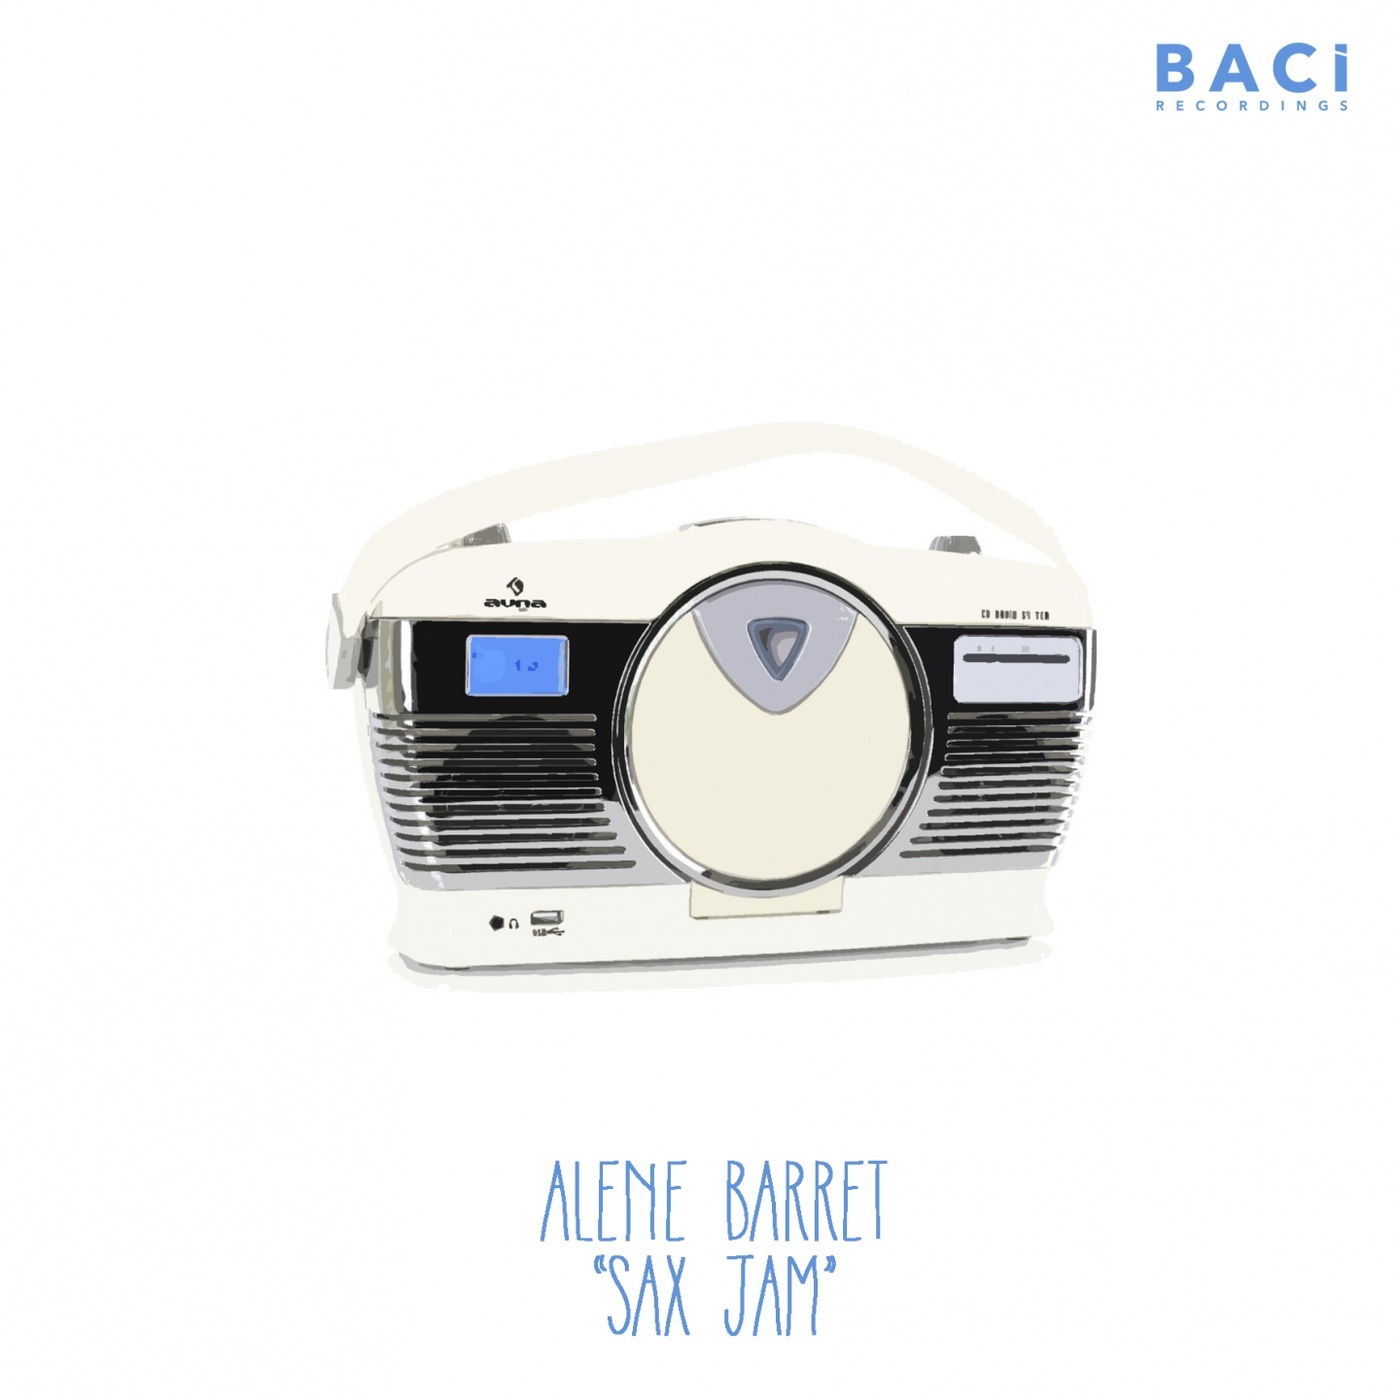 Alene Barret - Sax Jam / Baci Recordings